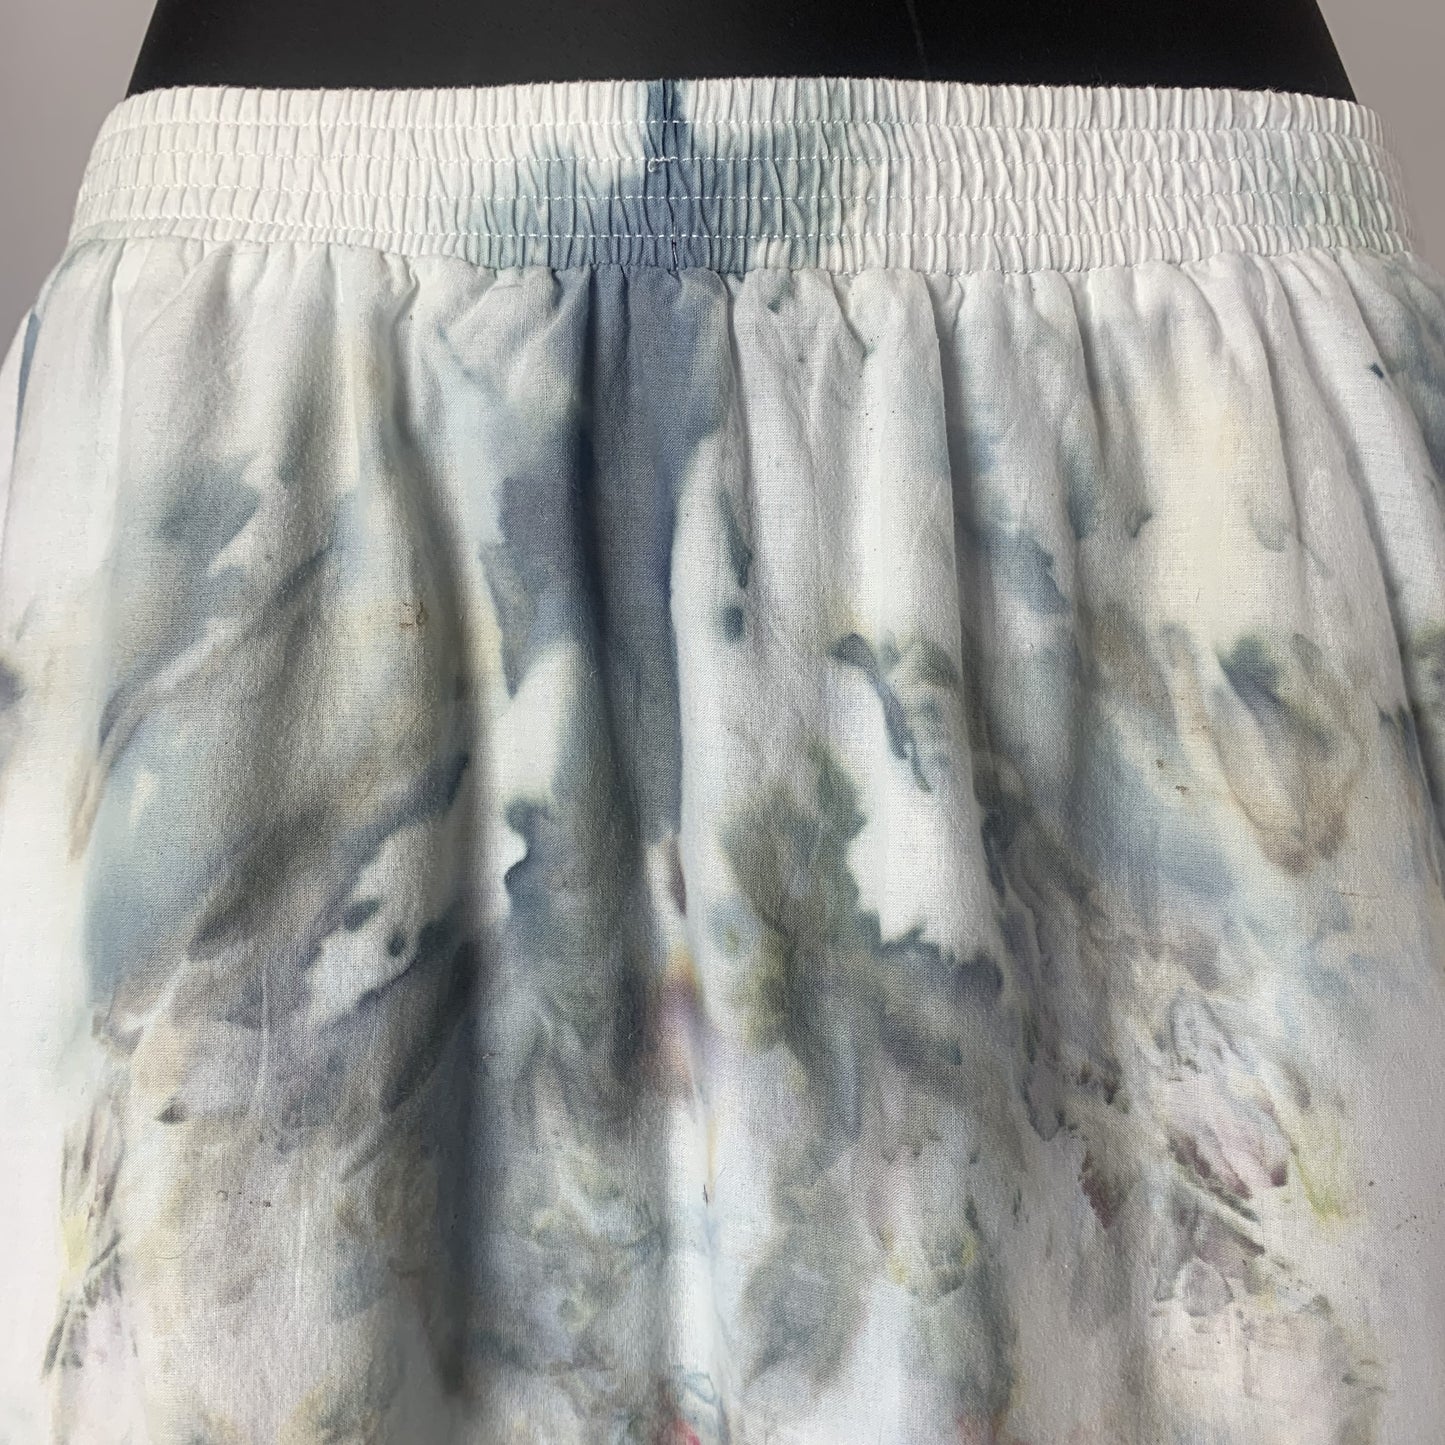 50 Shades of Gray | Knee-length skirt | 26-30” waist